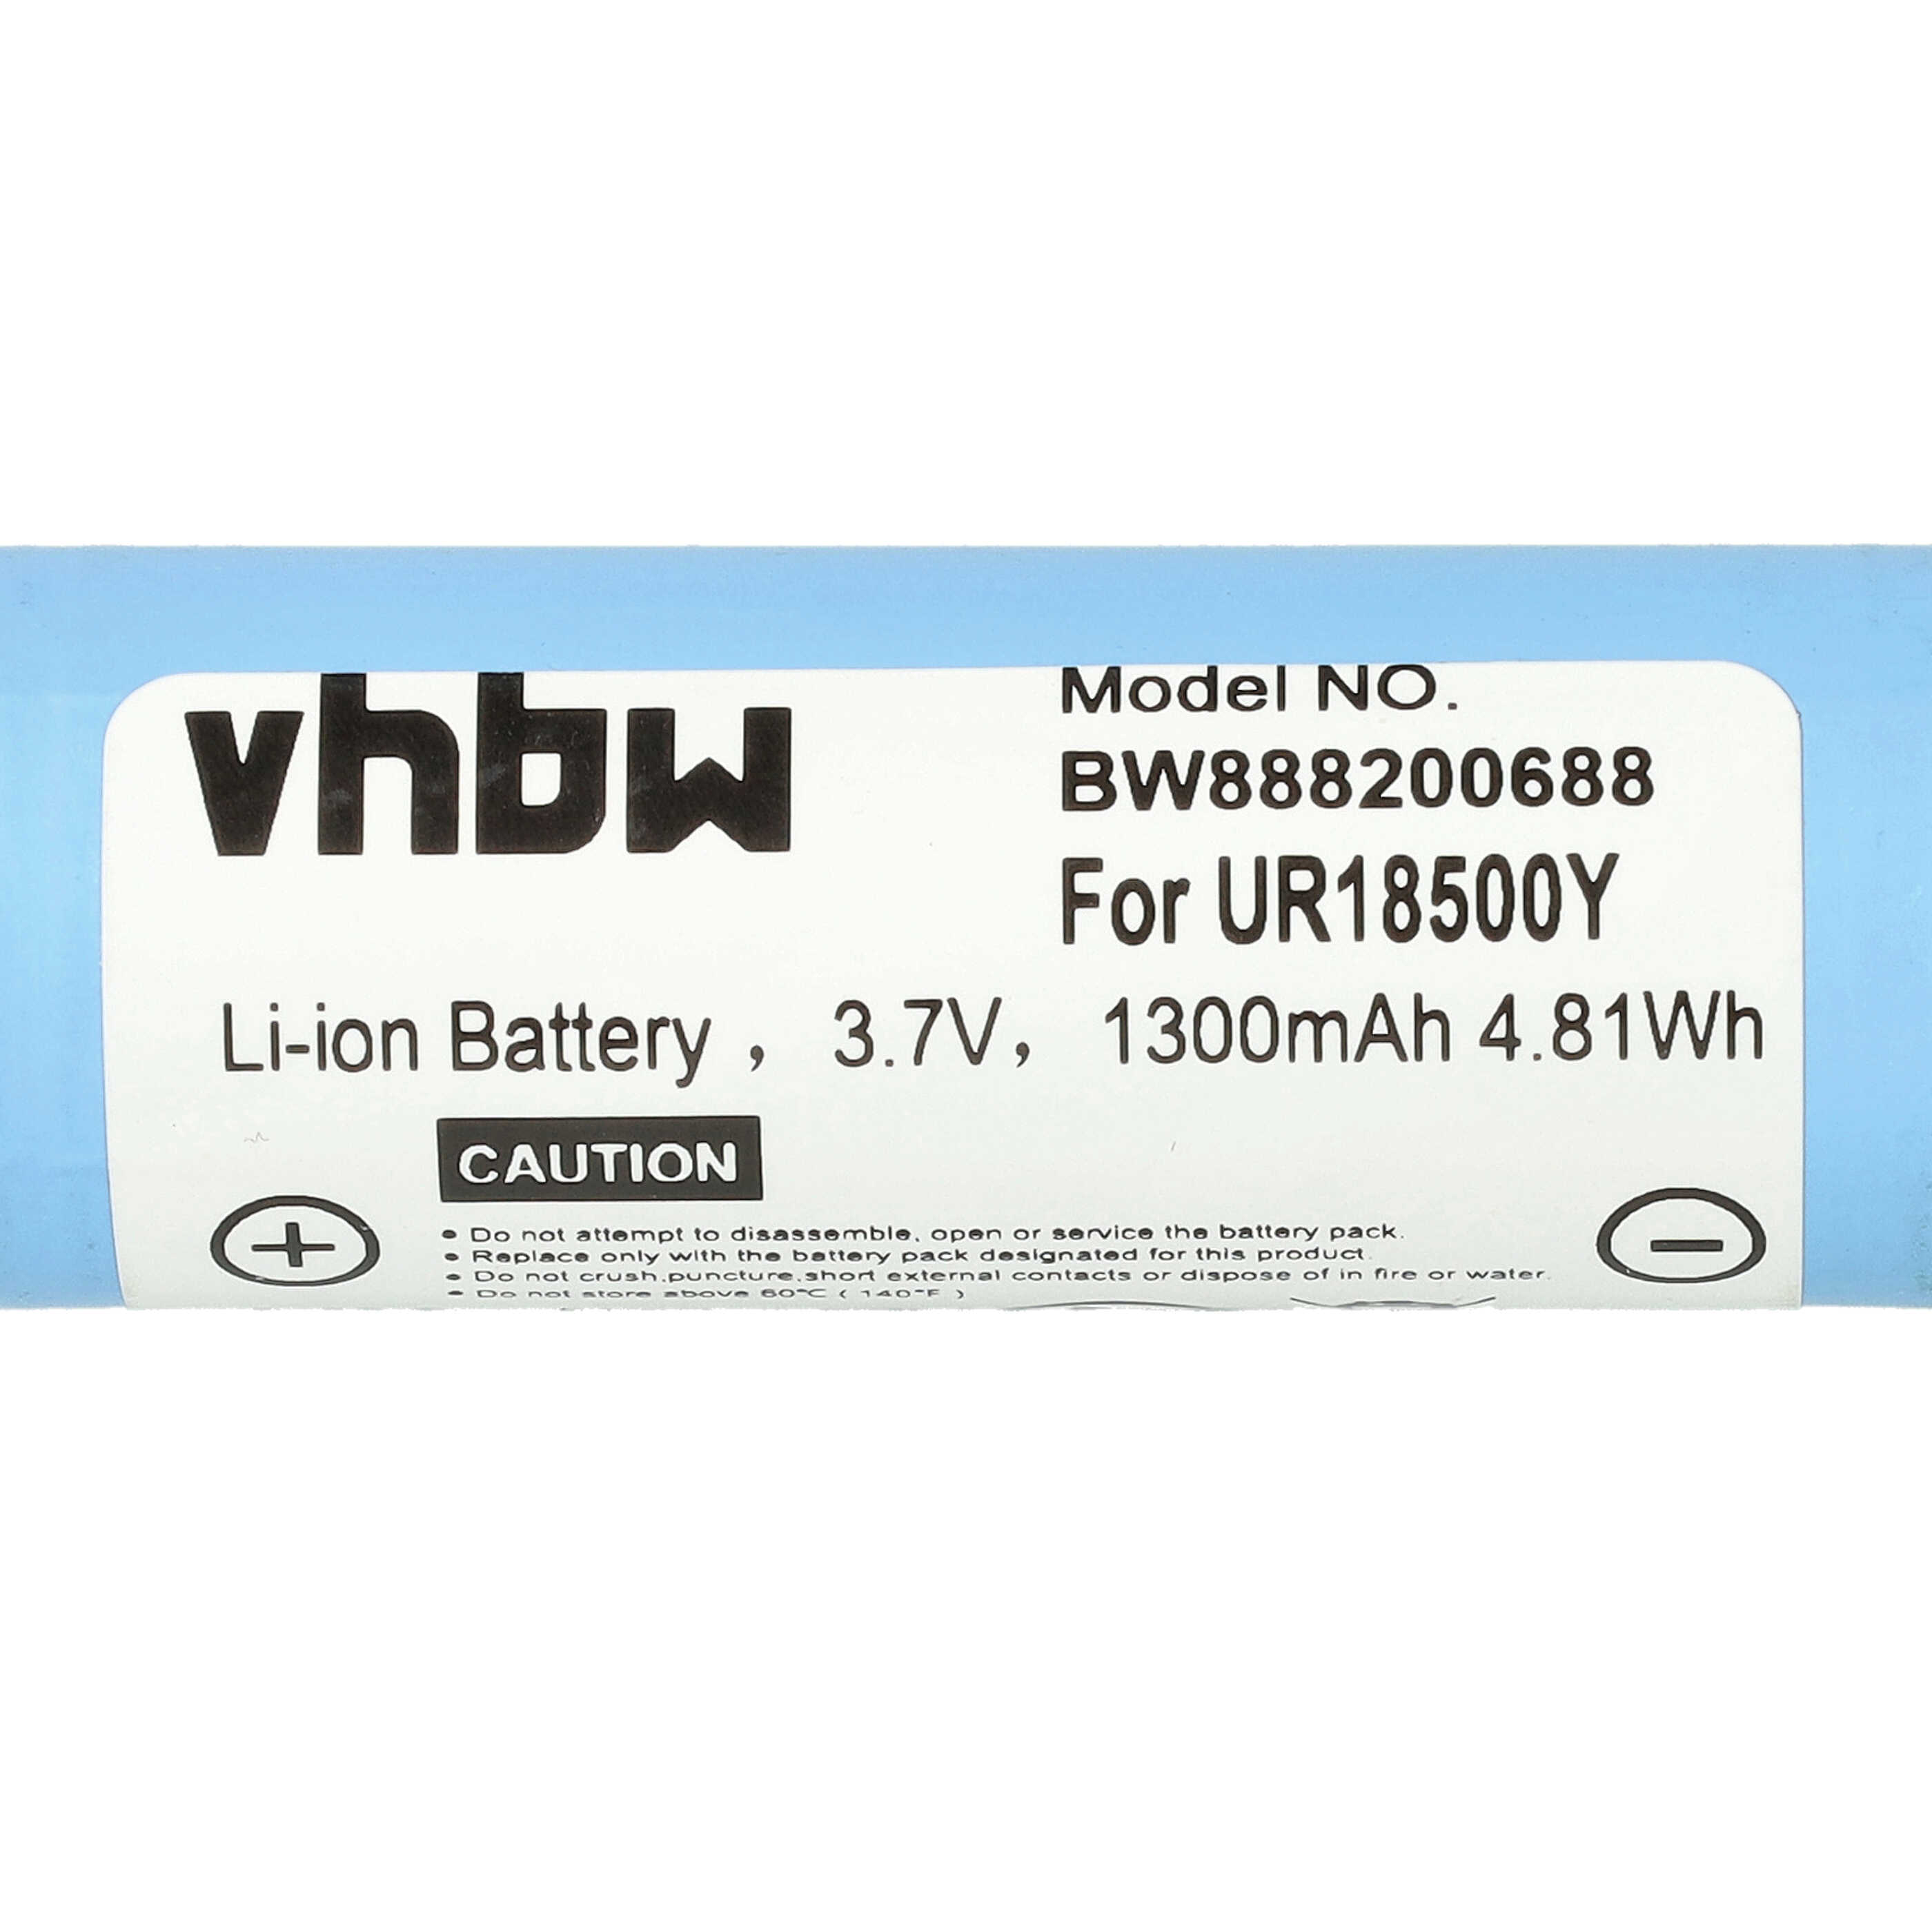 Electric Razor Battery Replacement for Braun 81377206, 67030925 - 1300mAh 3.7V Li-Ion